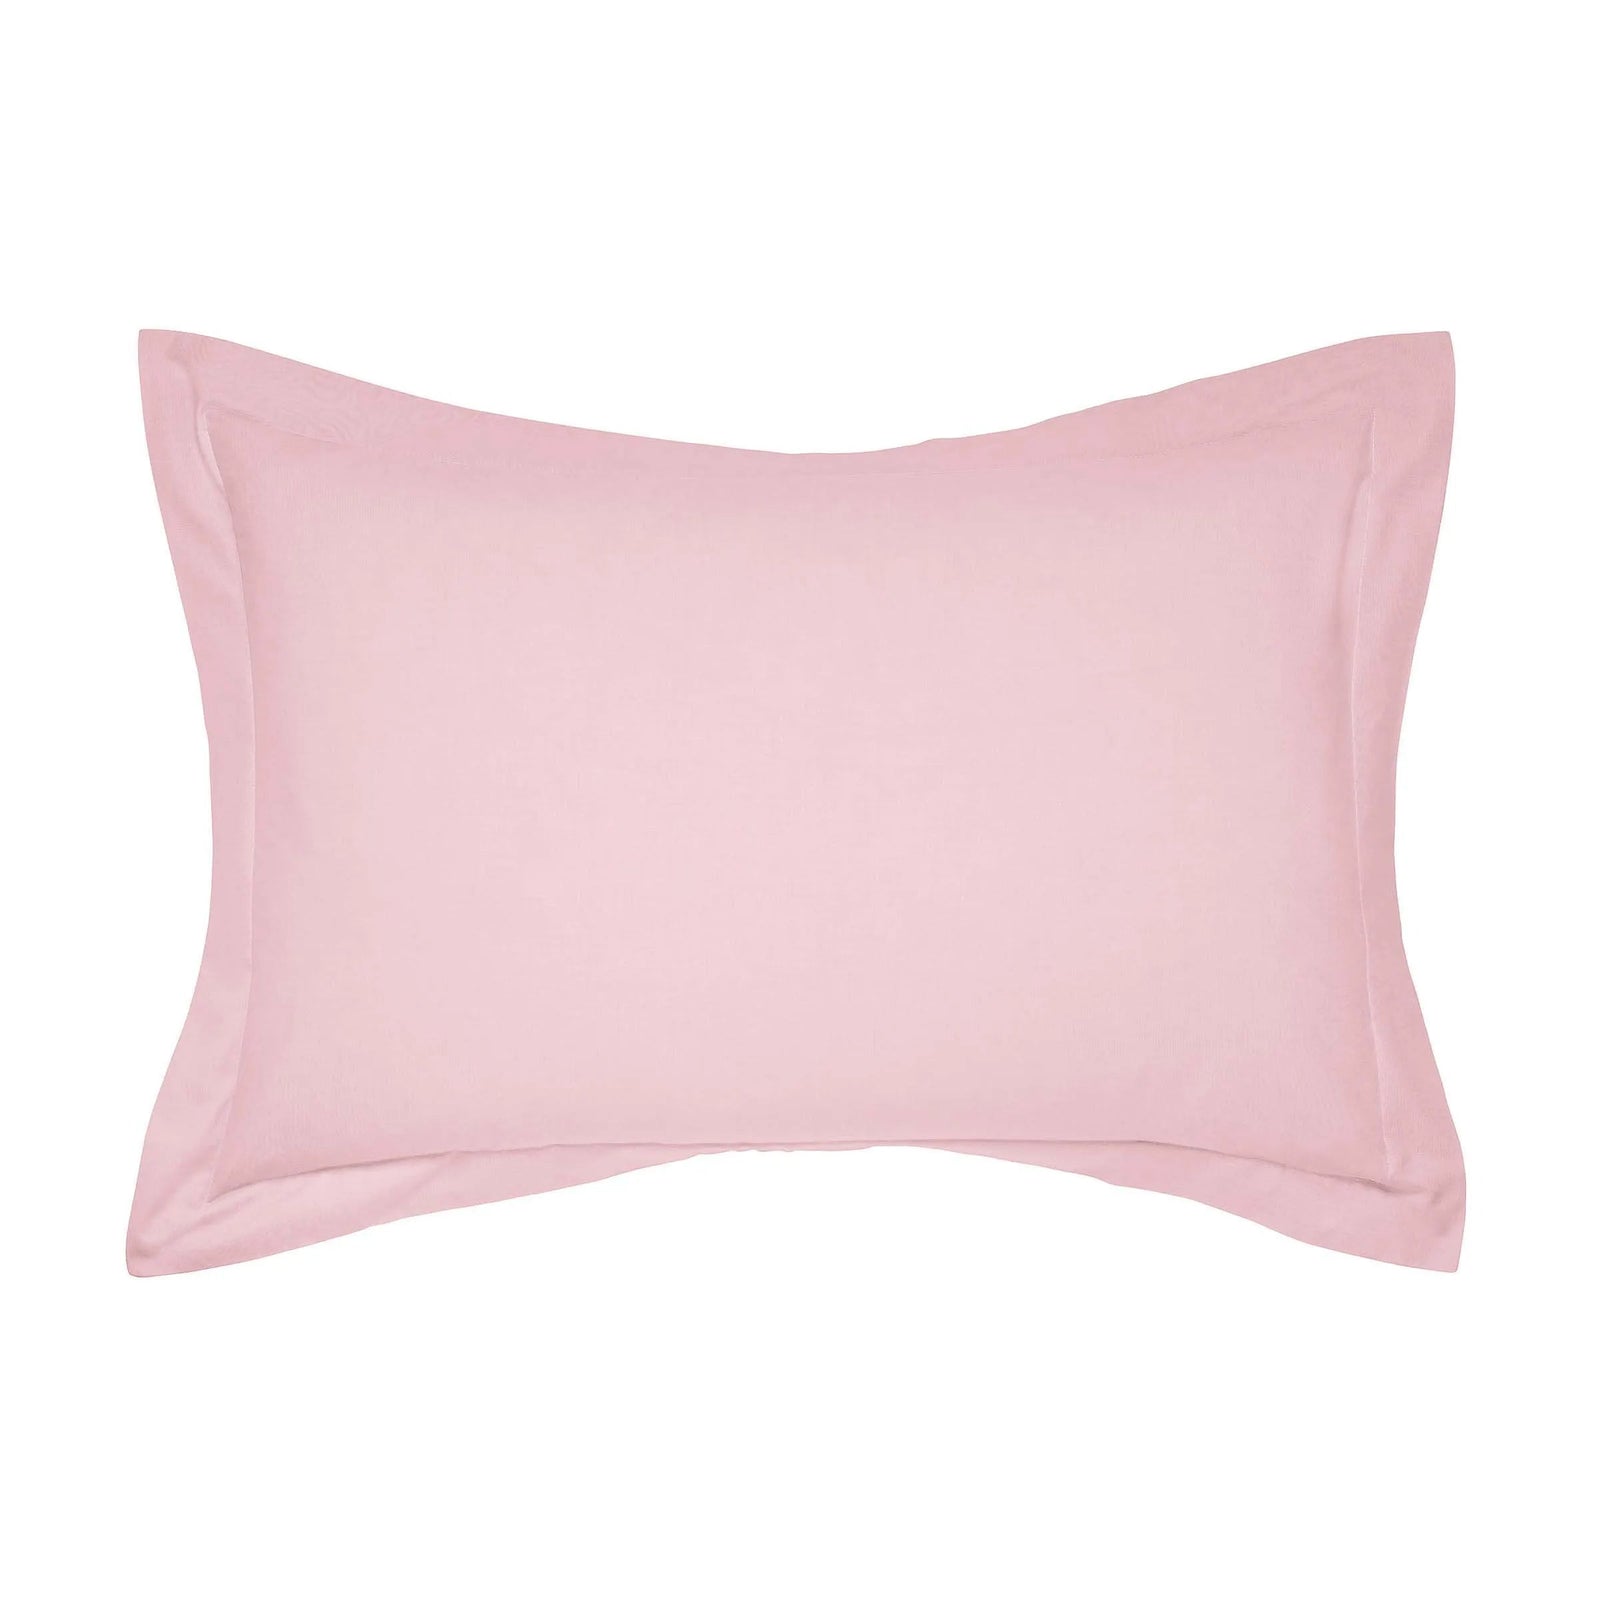 Helena Springfield 50/50 Plain Dye Percale Oxford Pillowcase in Blush